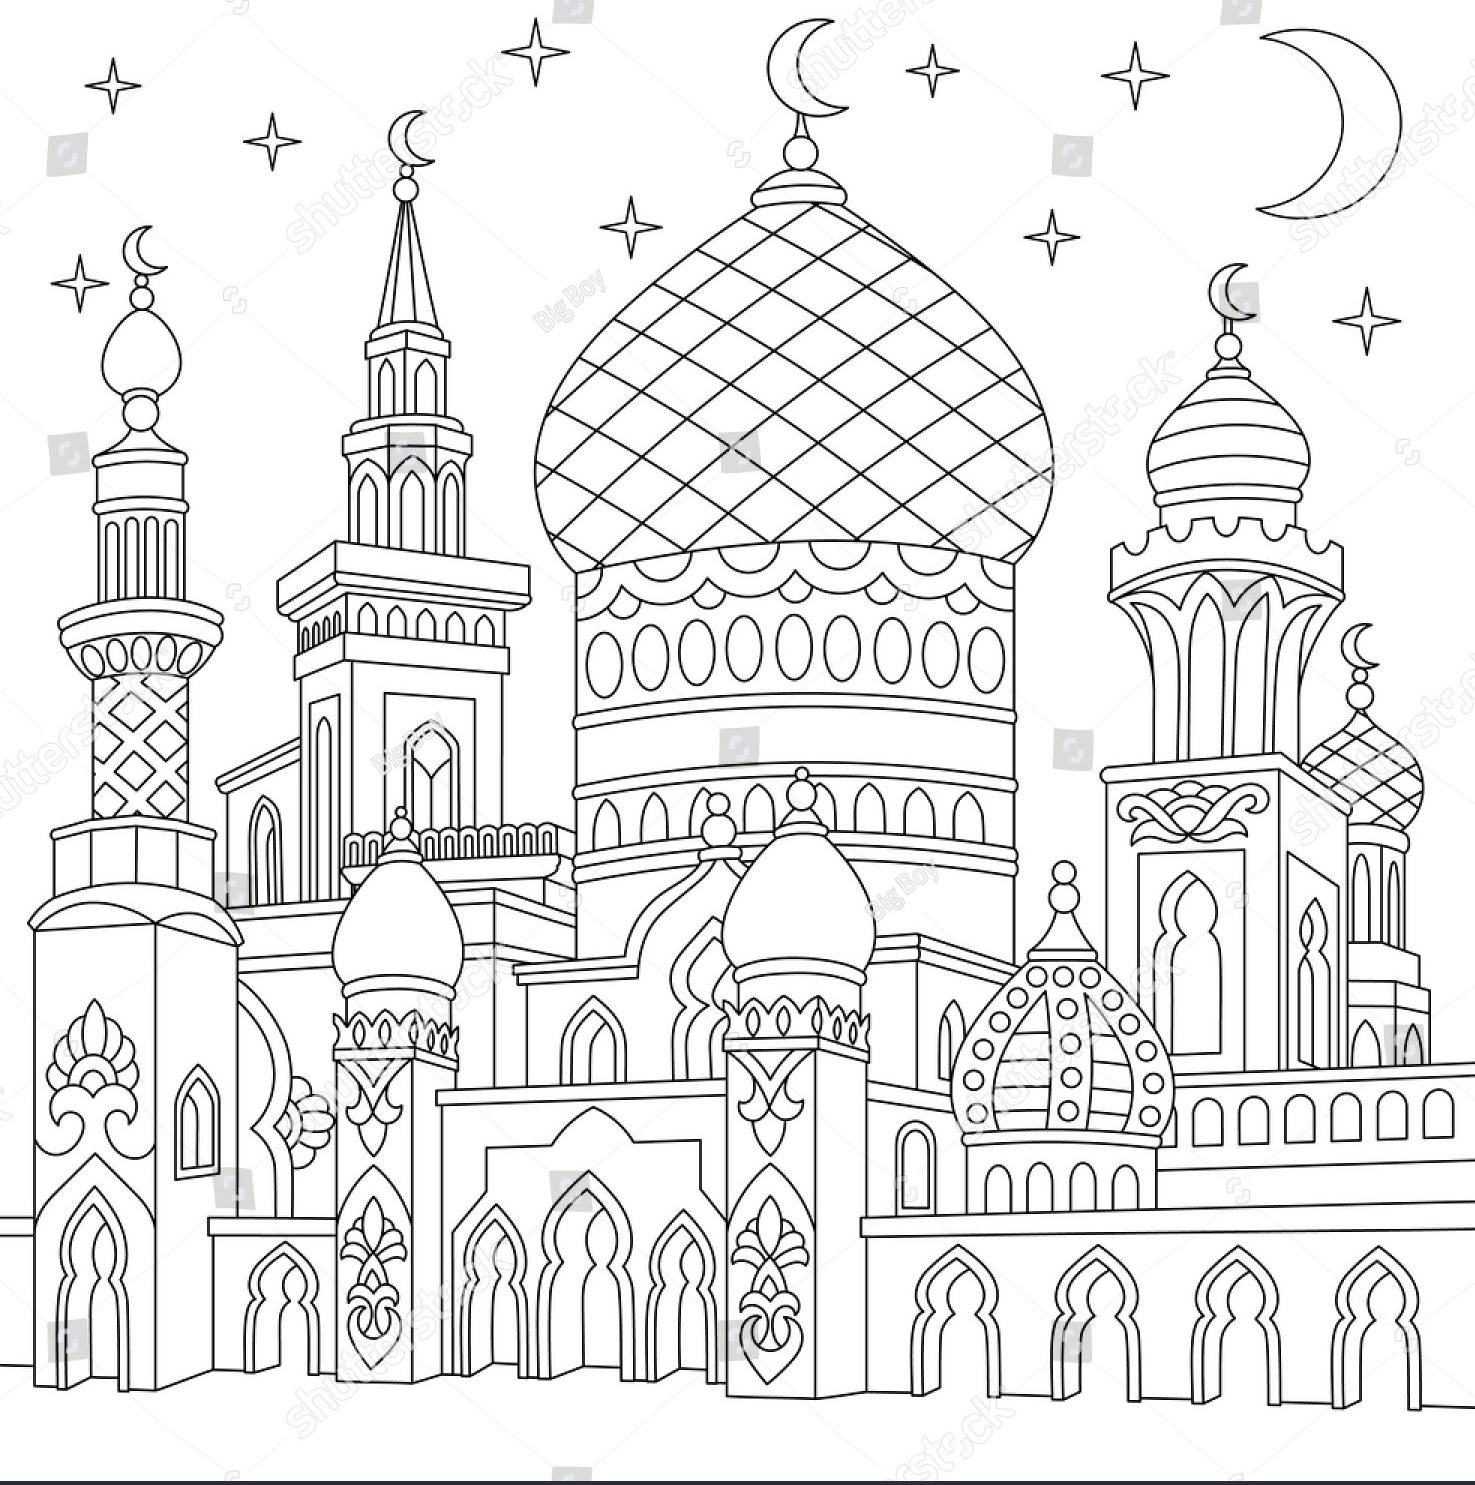 Koleksi Sketsa Gambar Masjid Yang Mudah Aliransket